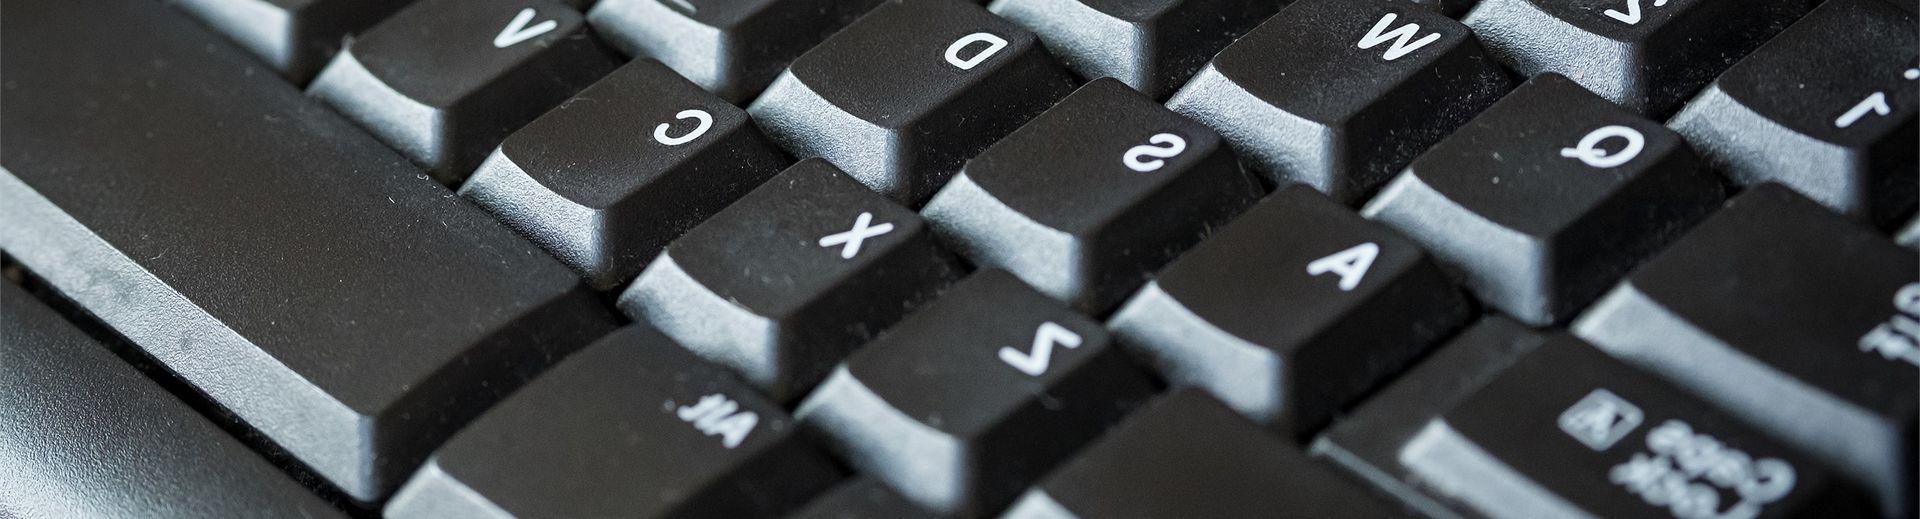 A close-up look of a grey computer keyboard.